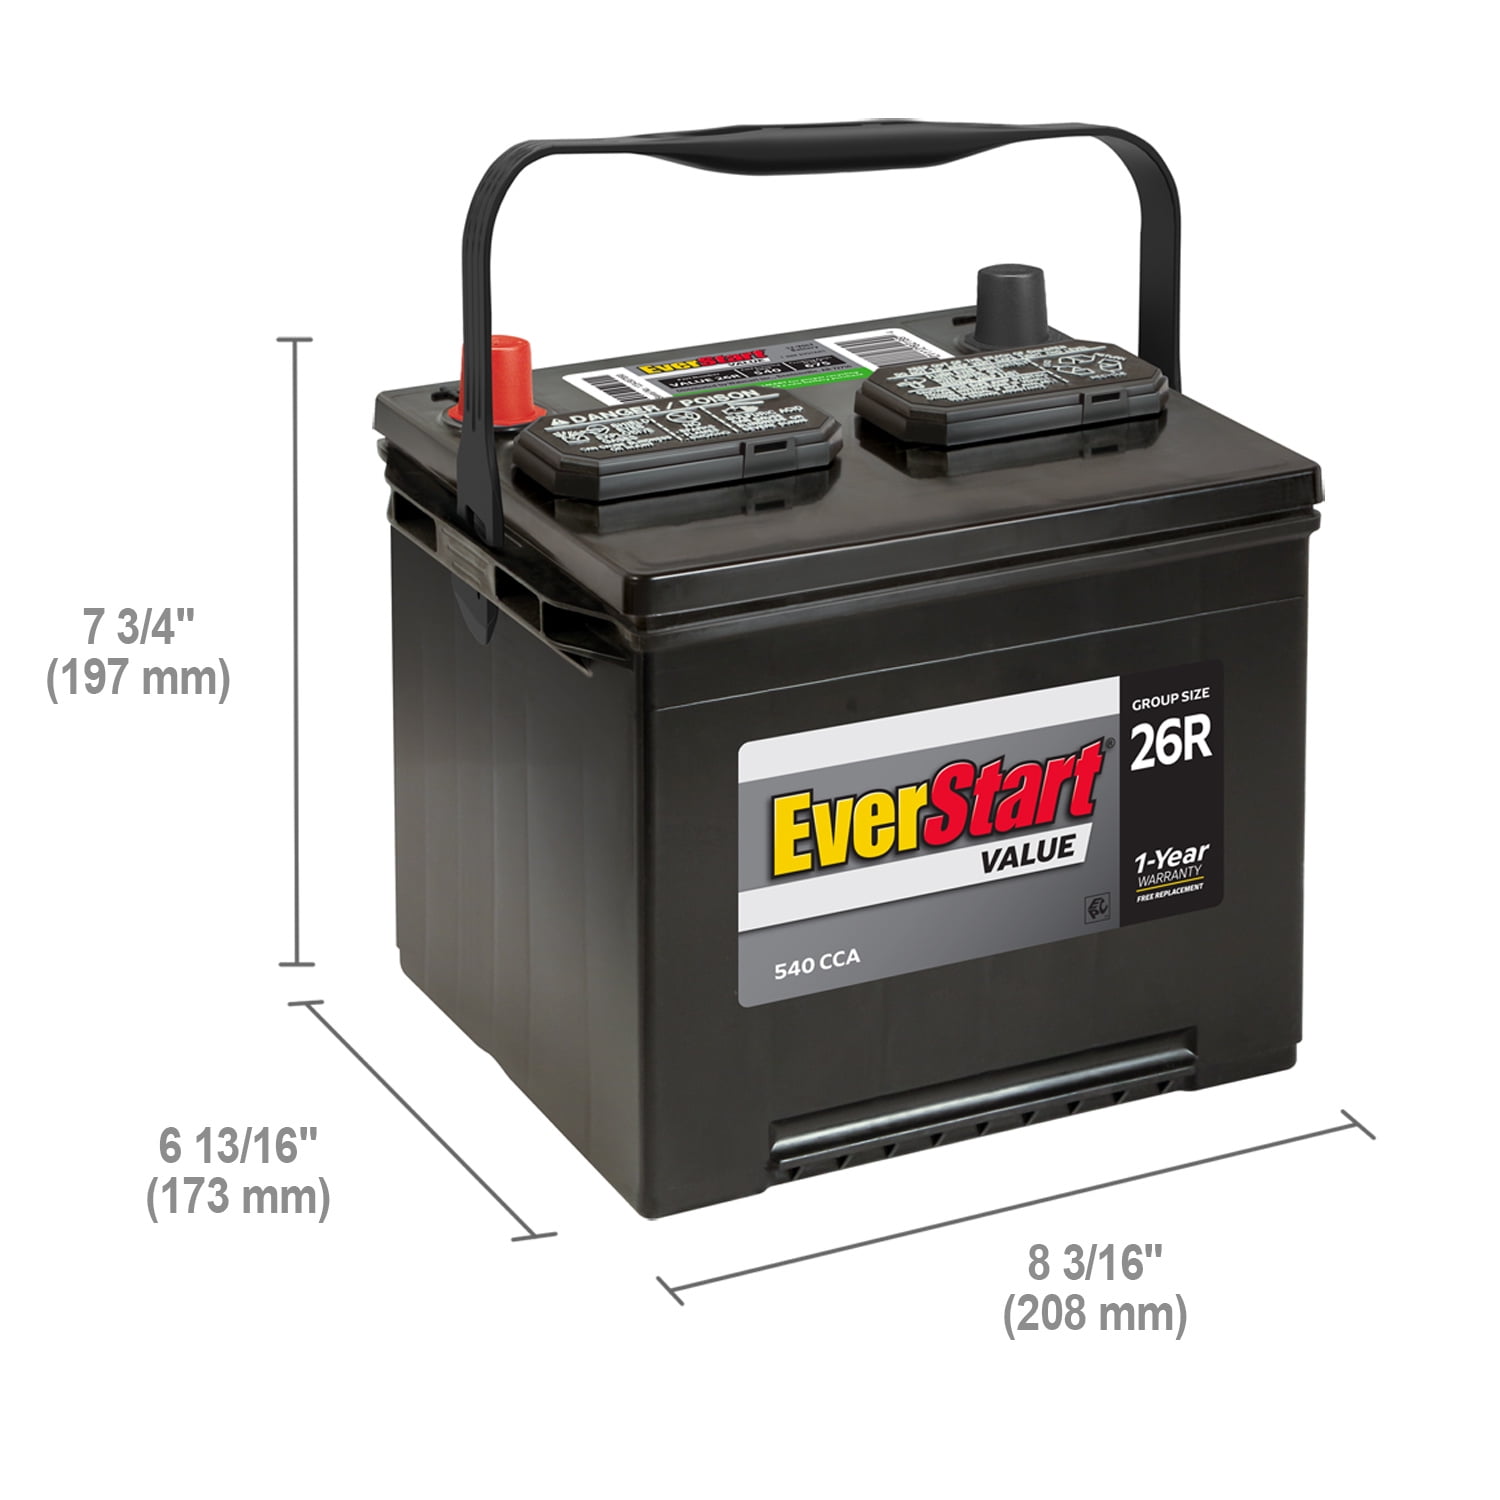 EverStart Value Lead Acid Automotive Battery, Group Size 26R (12 Volt/540  CCA) - Walmart.com